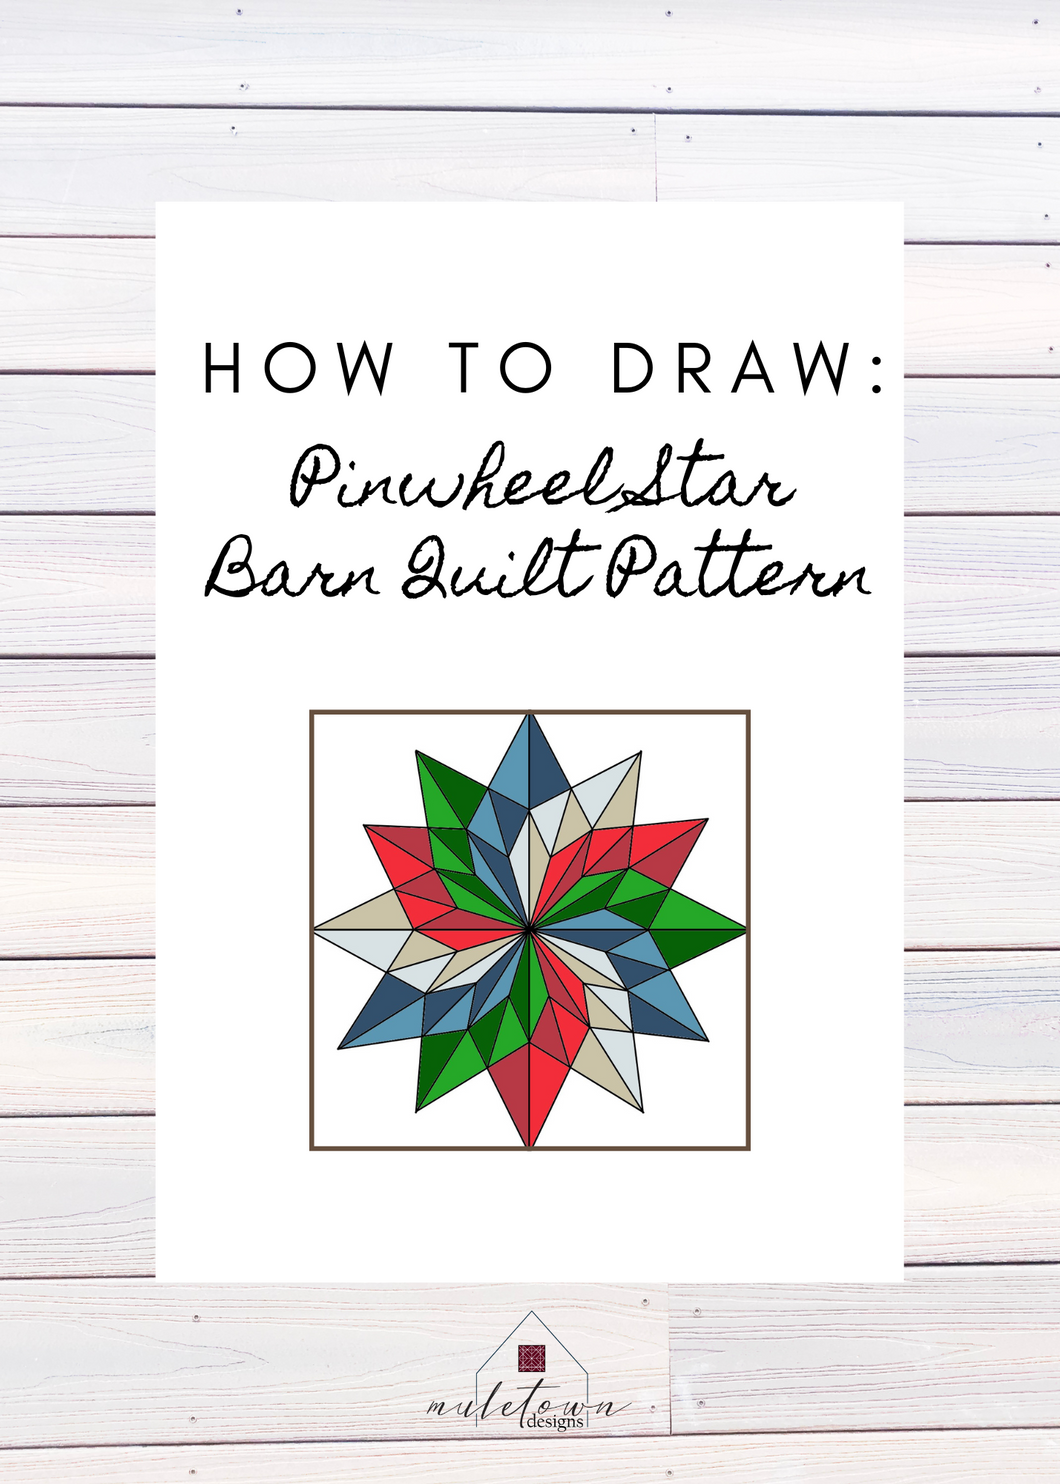 Pinwheel Star Pattern Instructions - DIGITAL DOWNLOAD